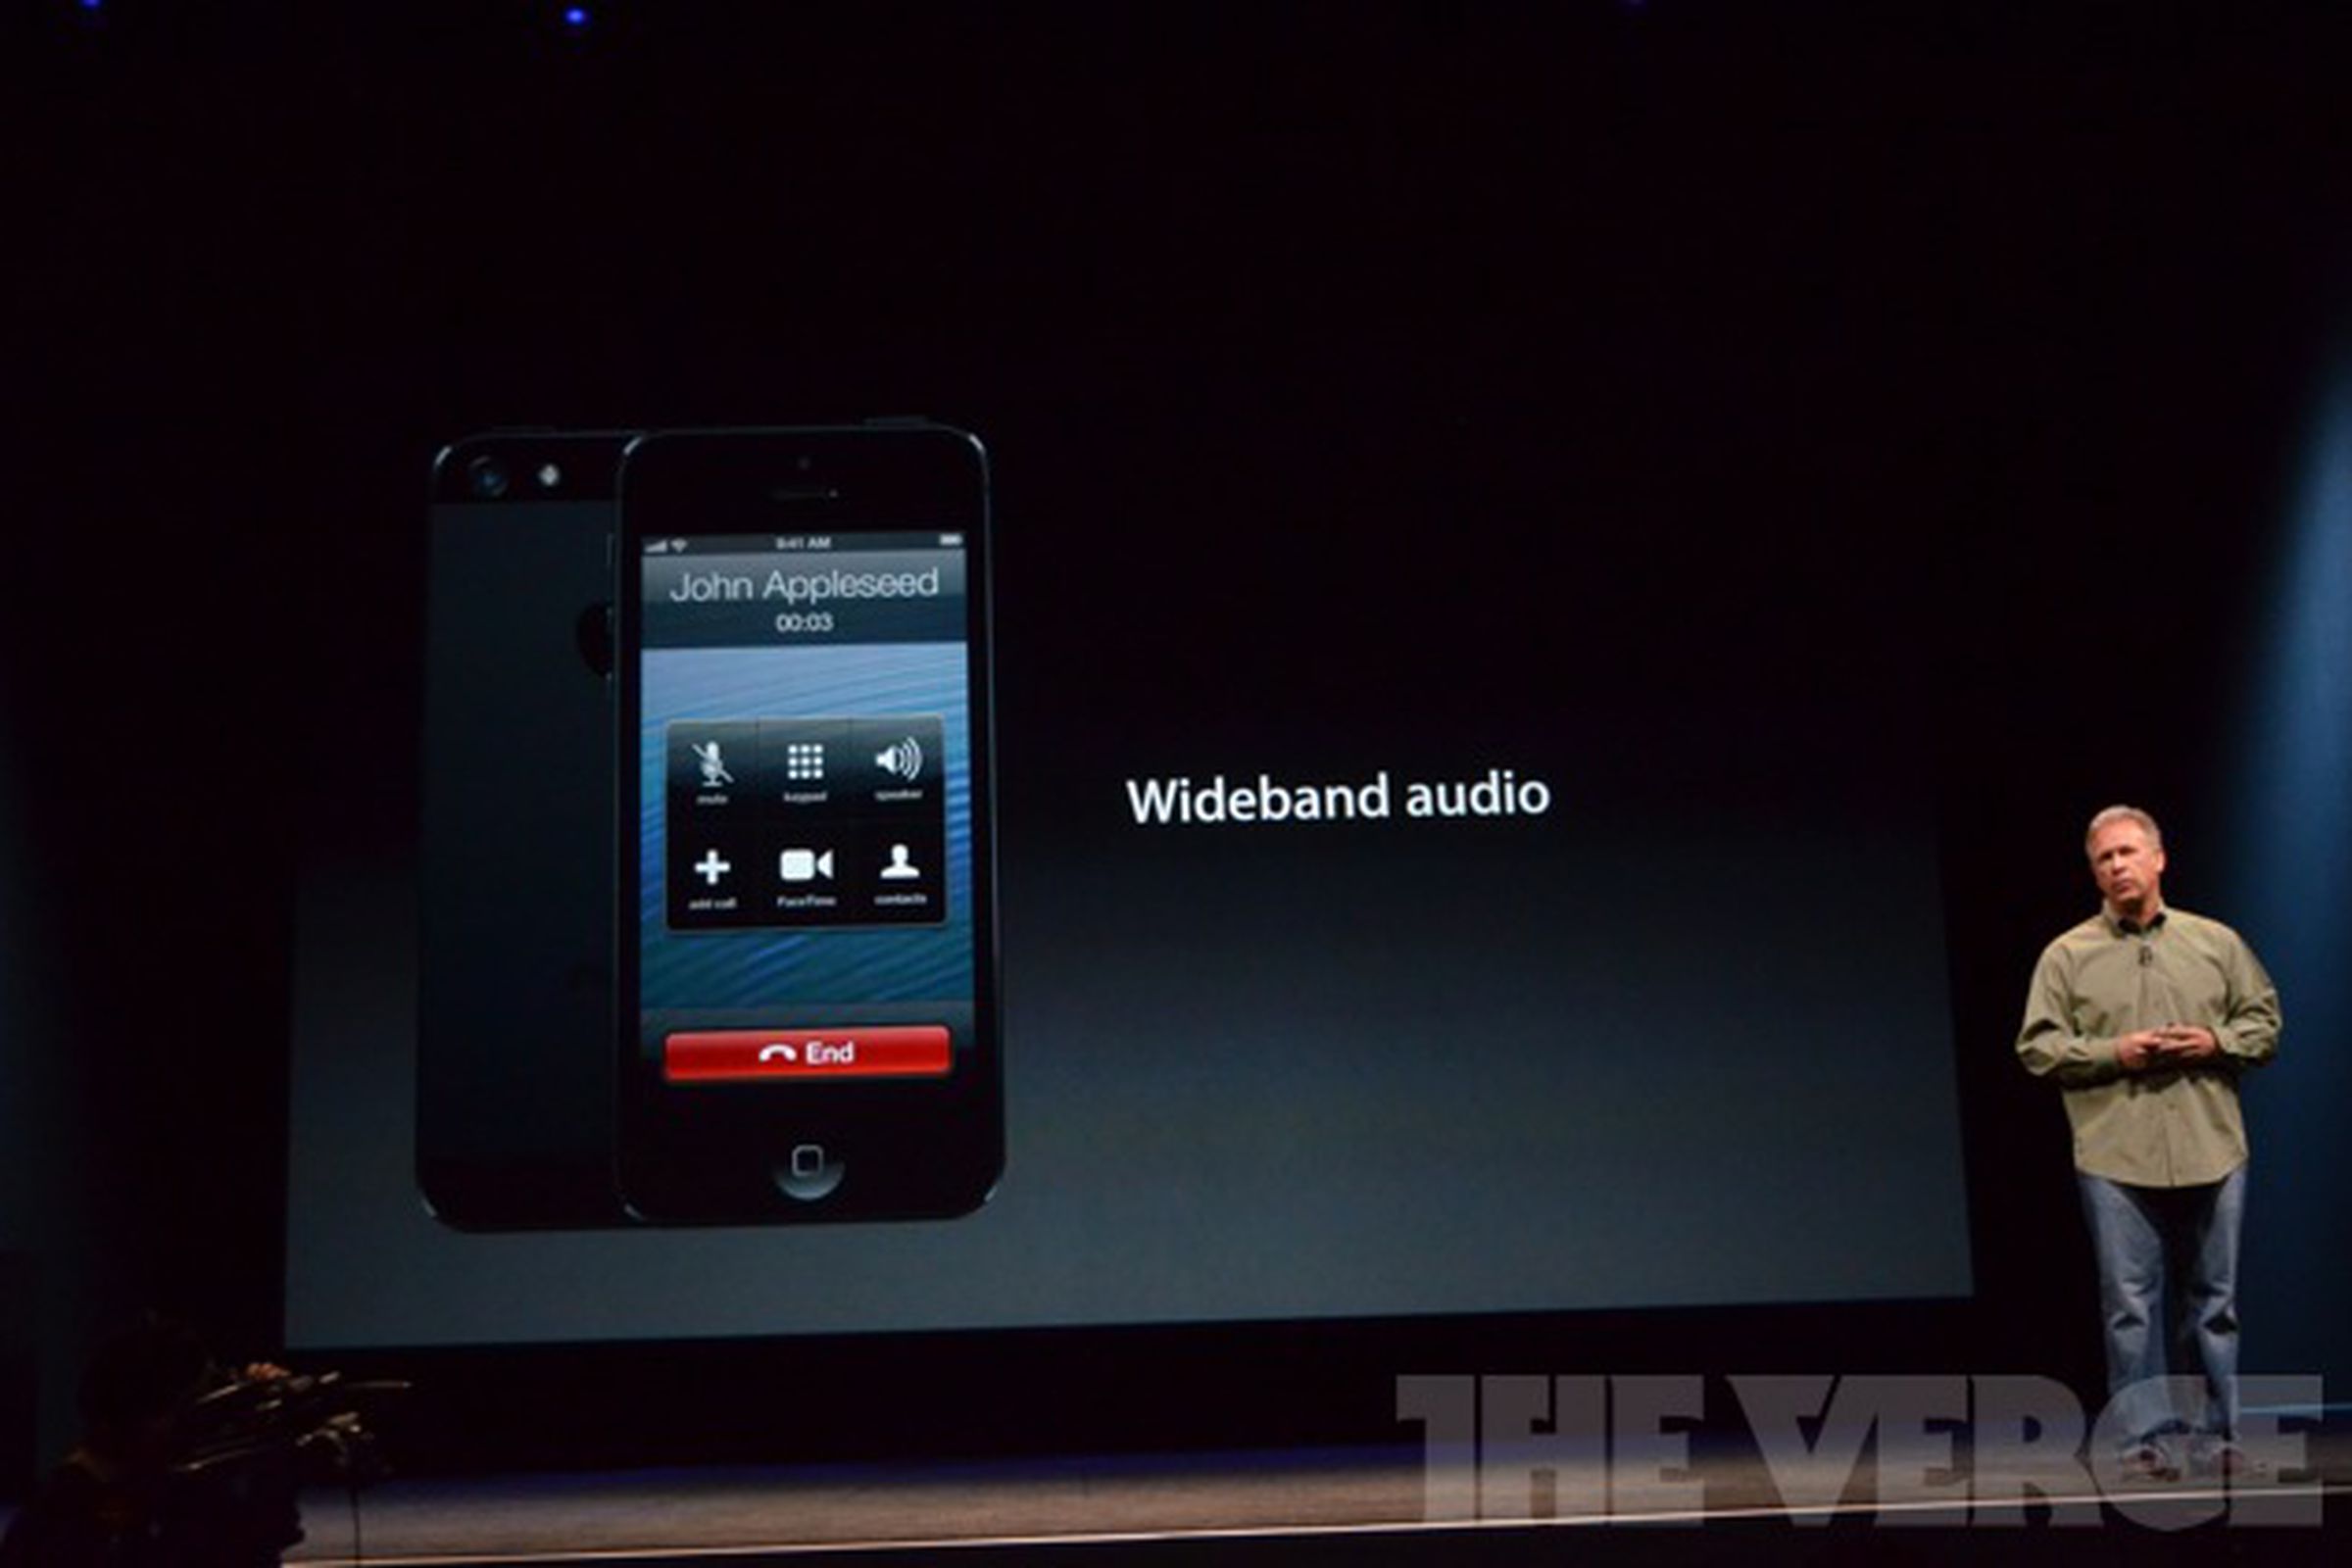 iPhone wideband audio